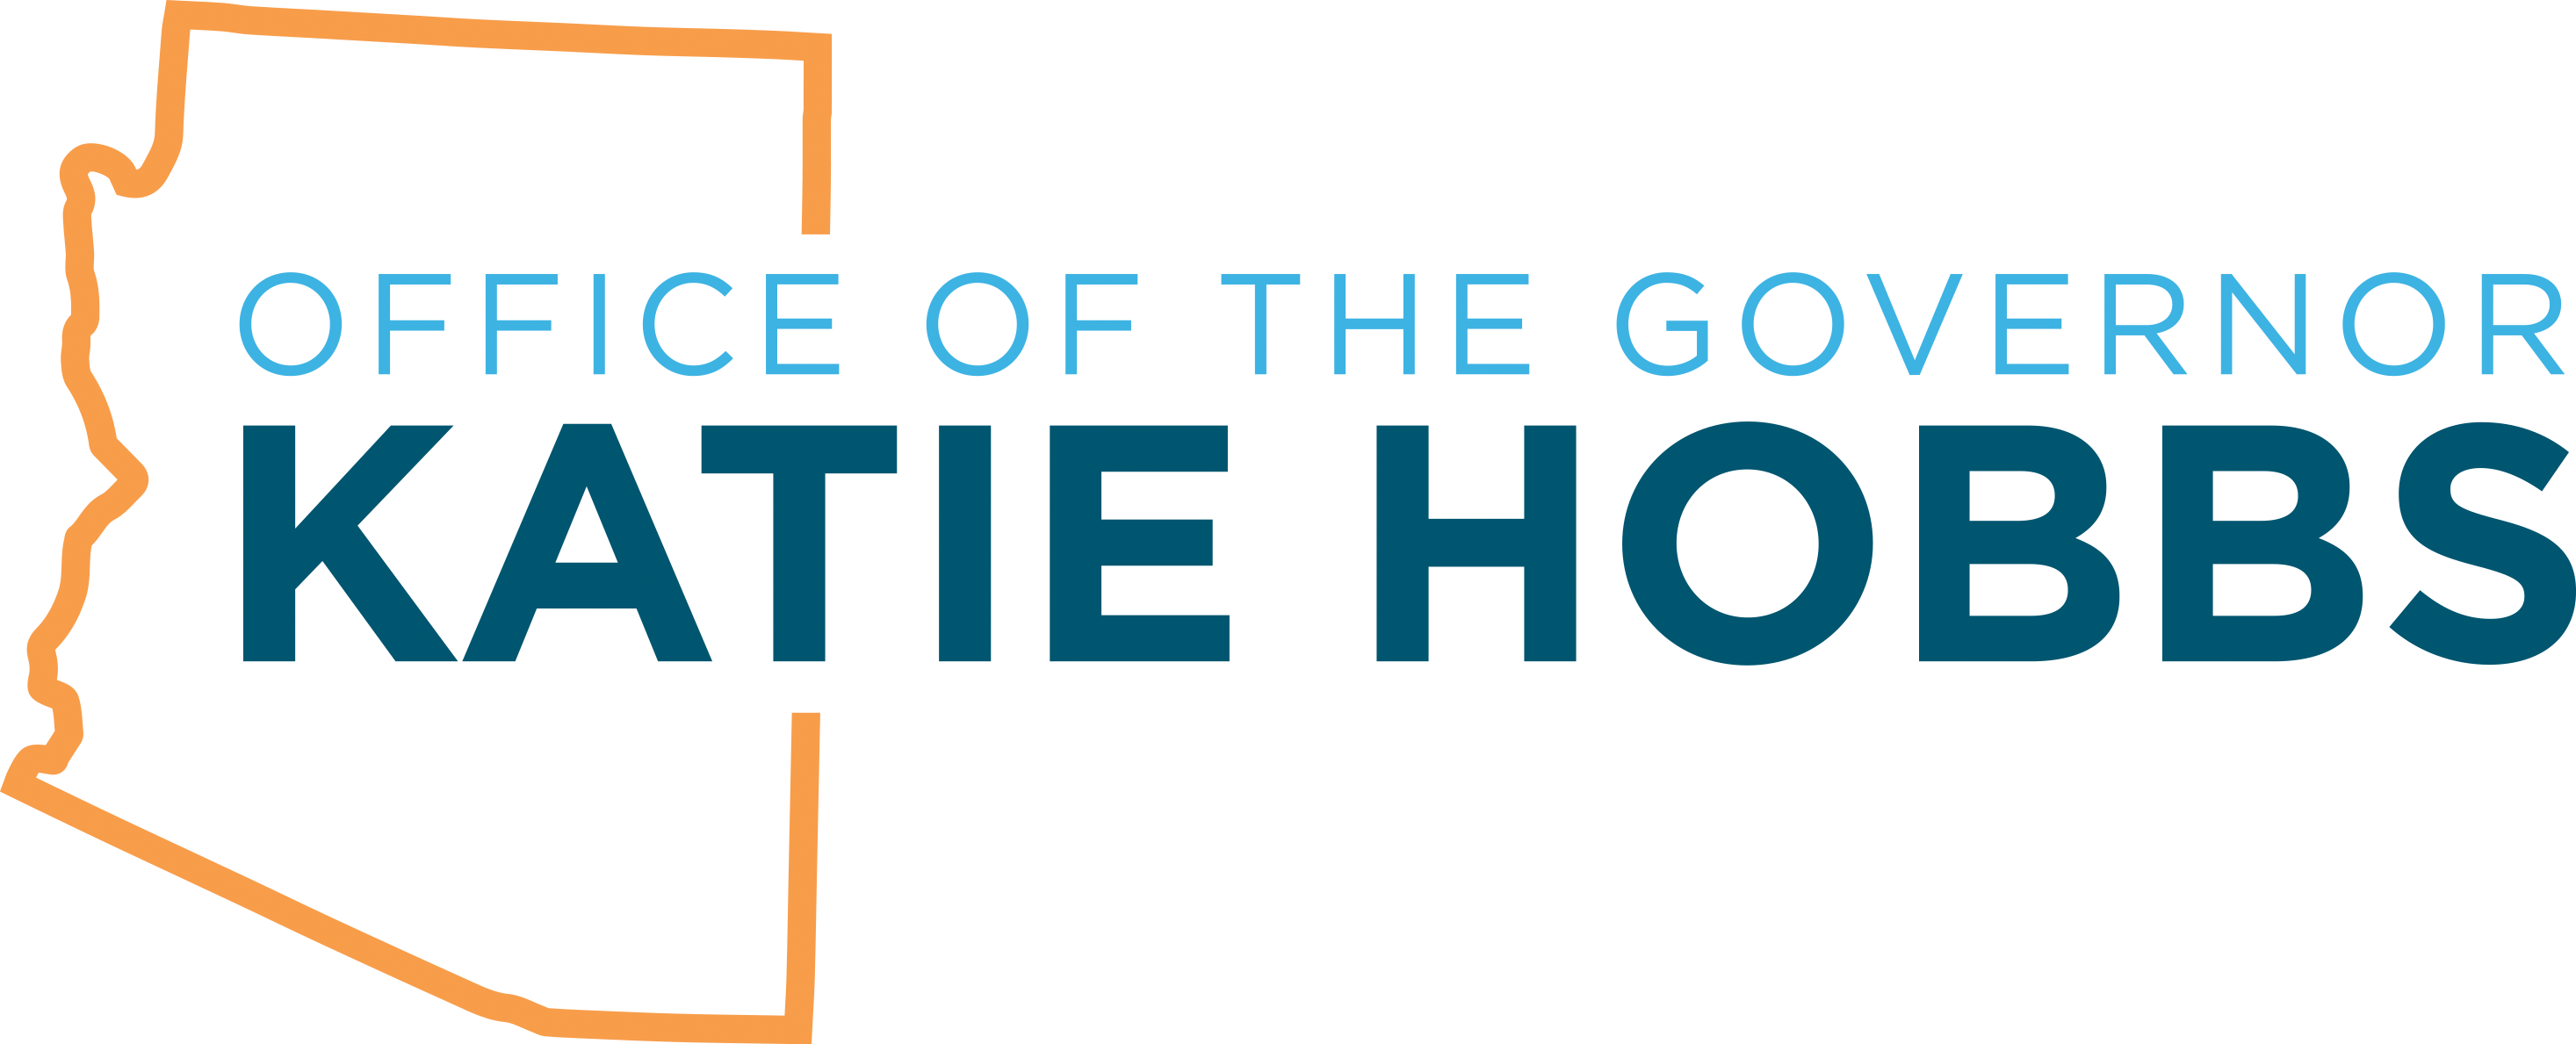 Office of Governor Katie Hobbs logo